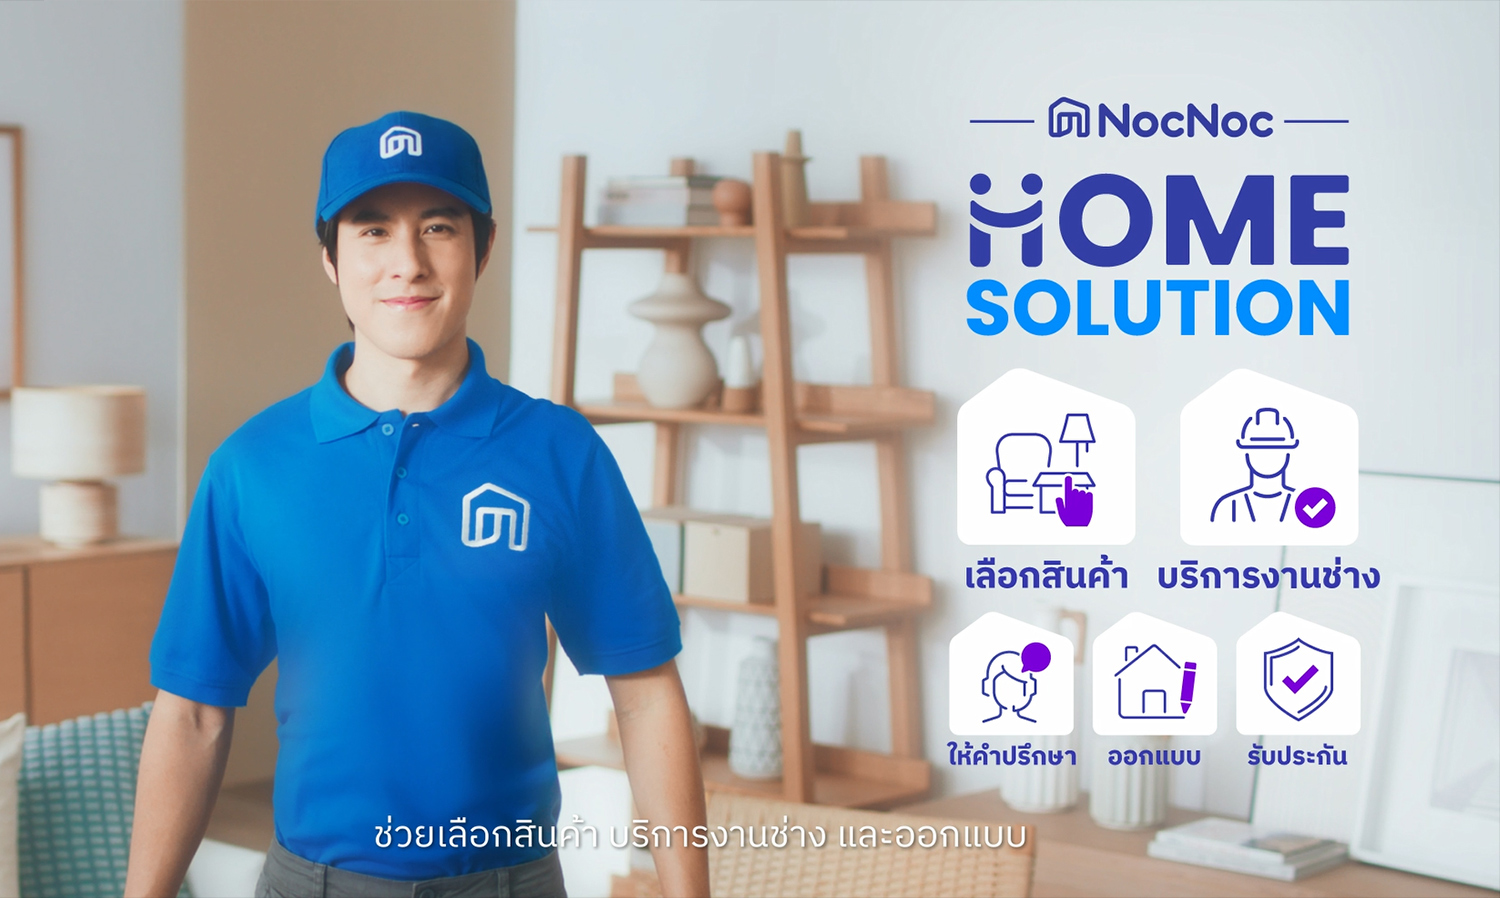 nocnoc-รุกตลาด-home-and-living-ชู-“nocnoc-home-solution”-เสริมทั